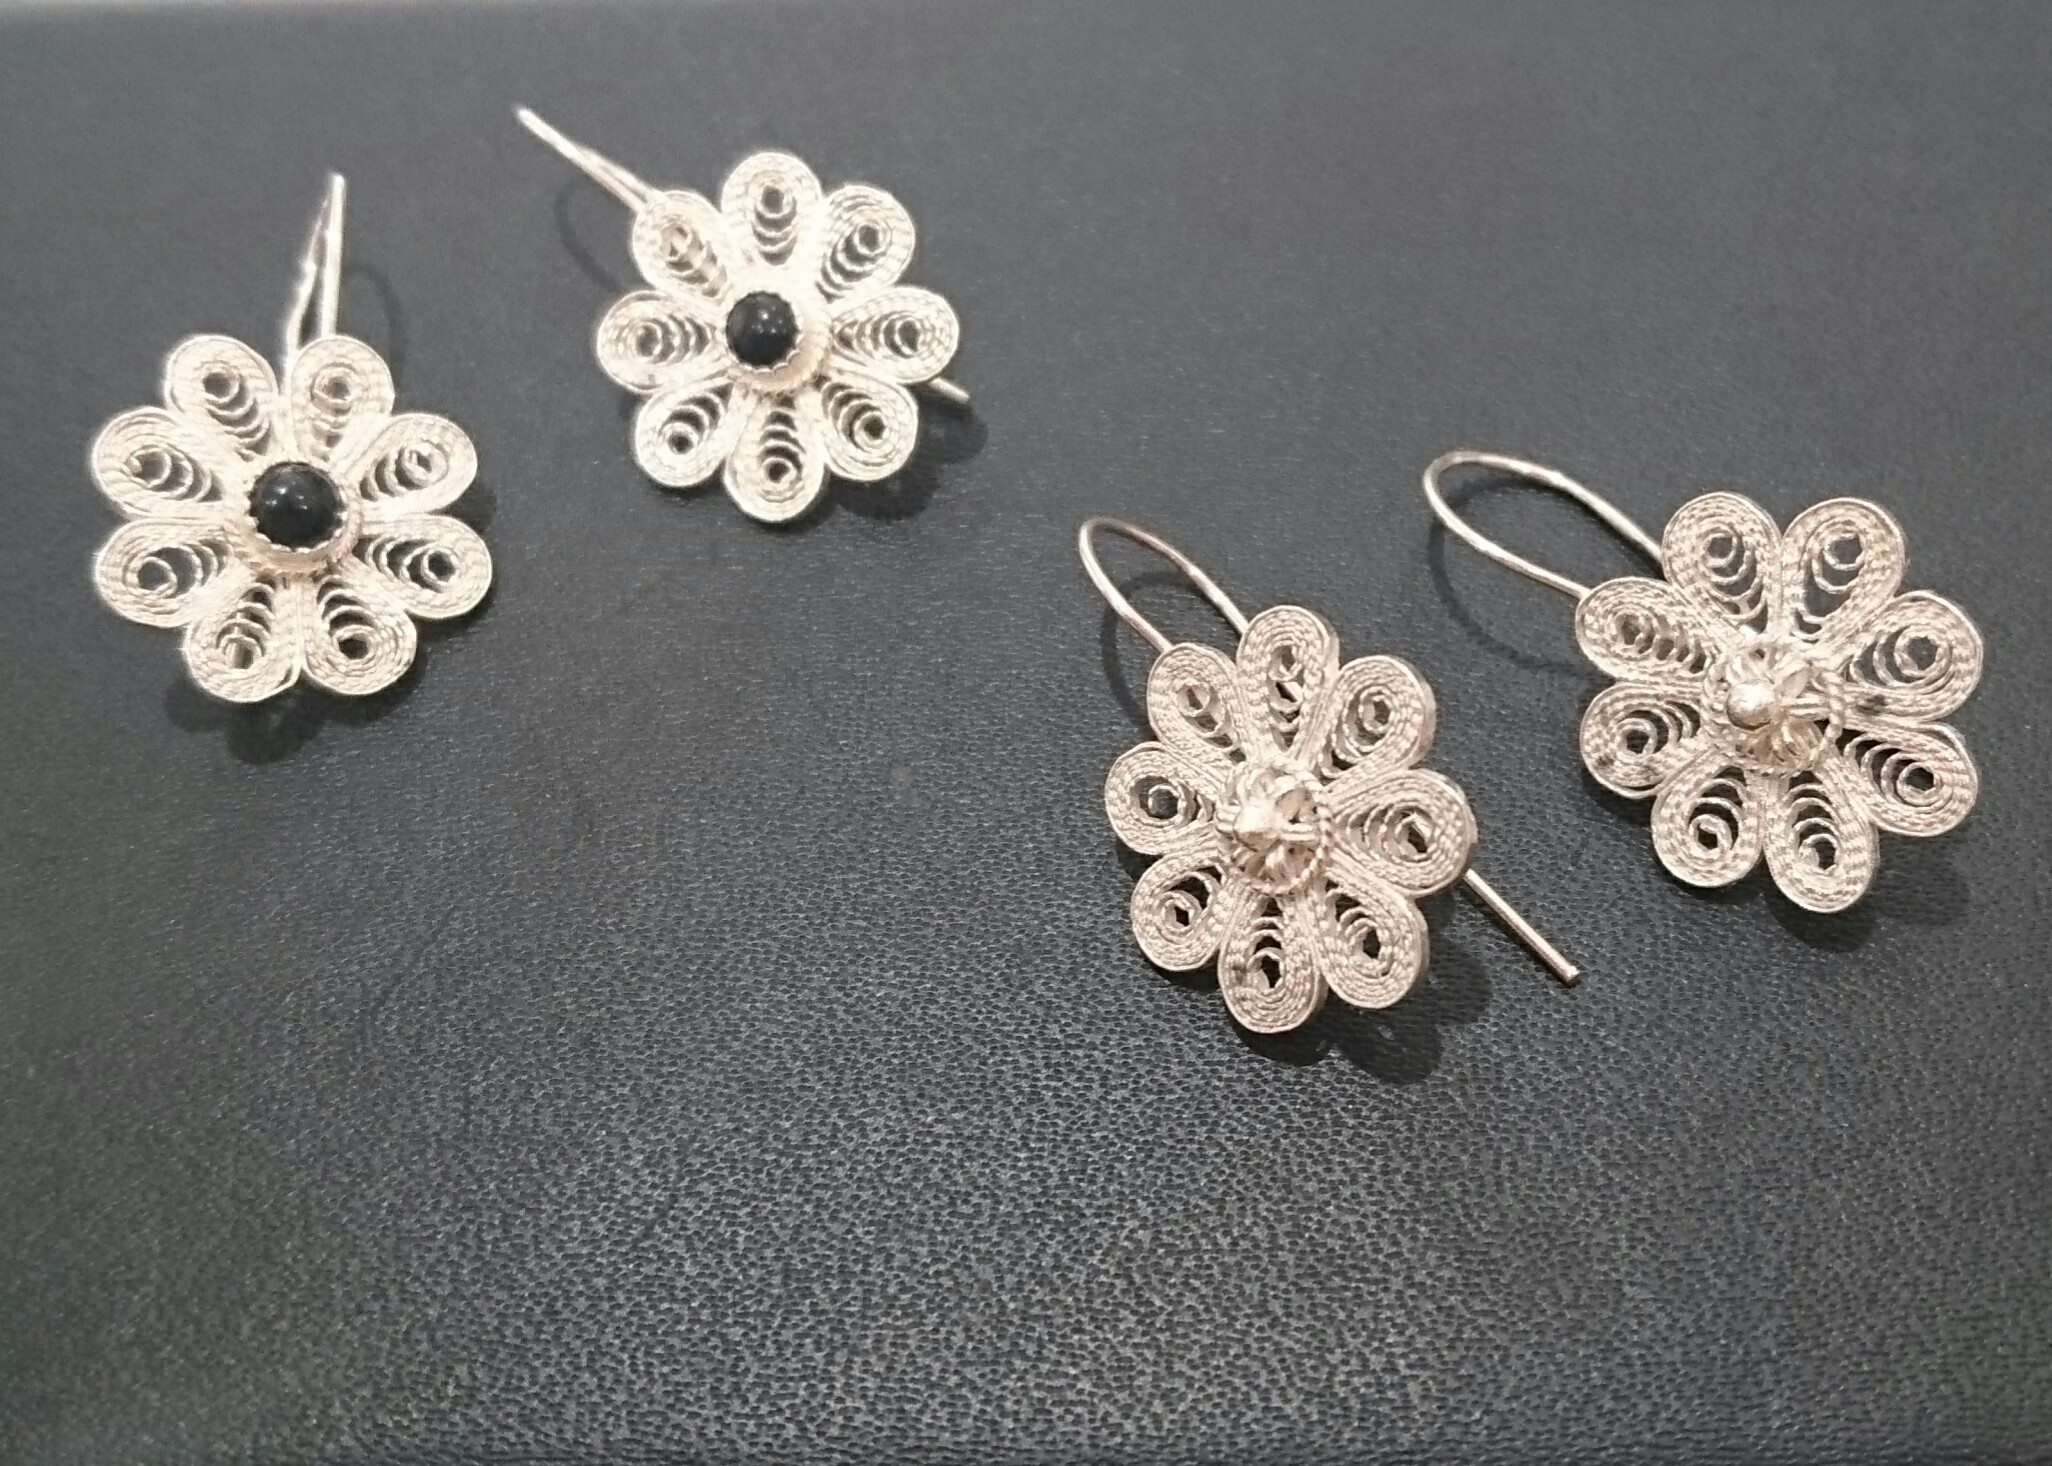 Small flower filigree earrings